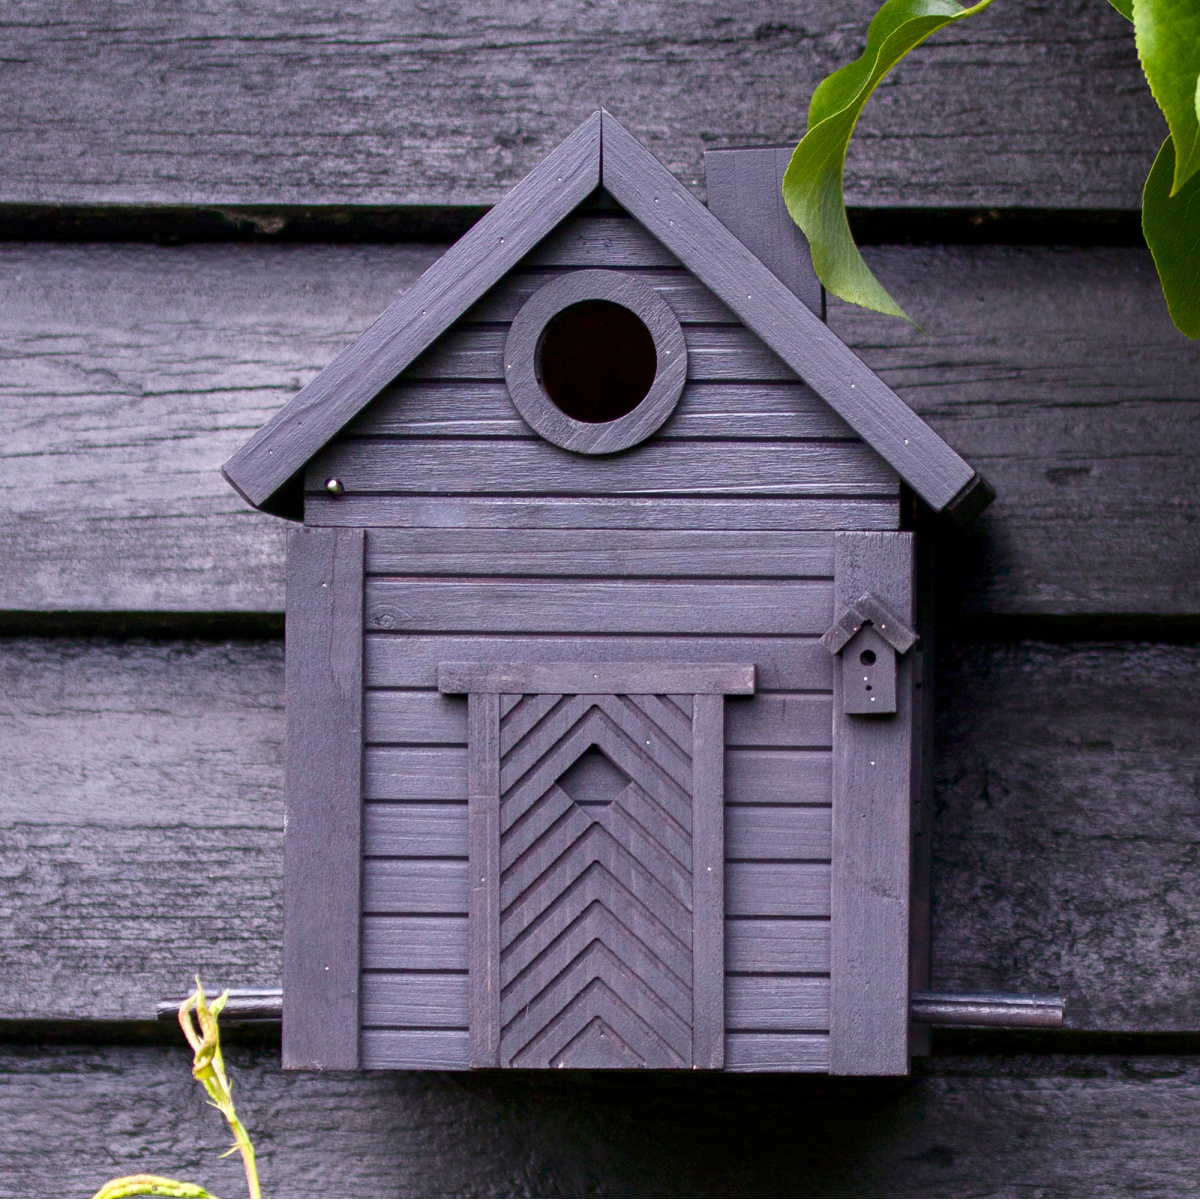 Wildlife Garden nest box / automatic feeder - charcoal